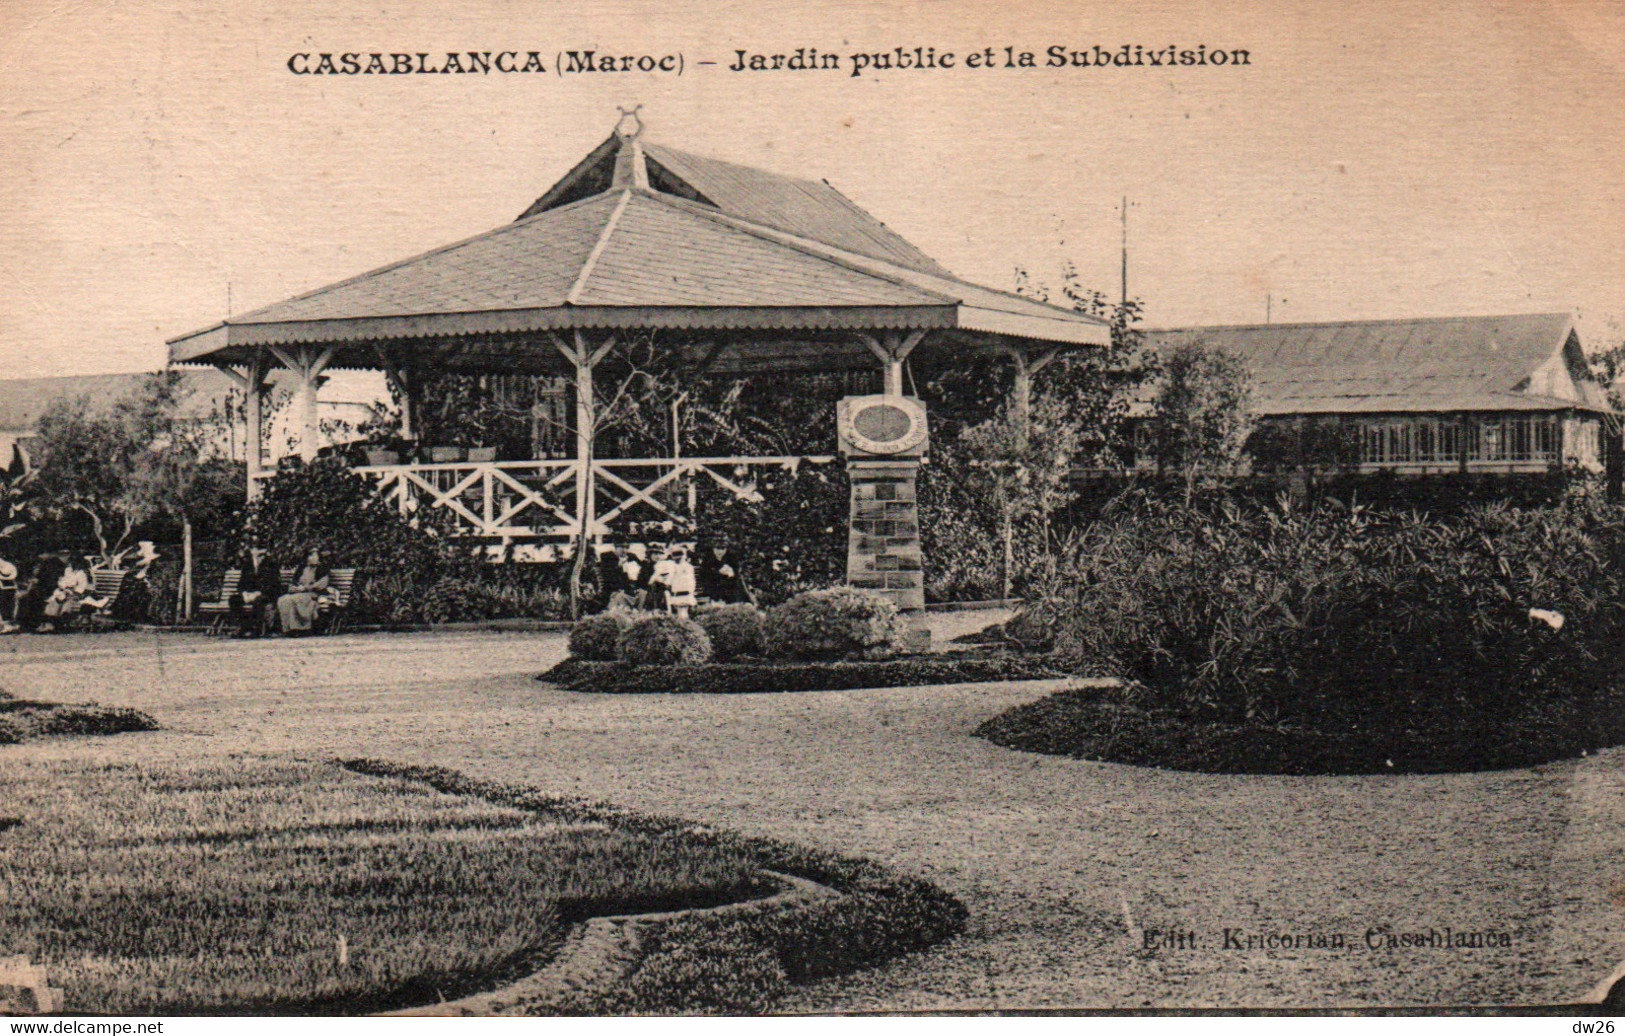 Casablanca: Le Jardin Public Et La Subdivision - Edition Kricorian - Carte De 1920 - Casablanca